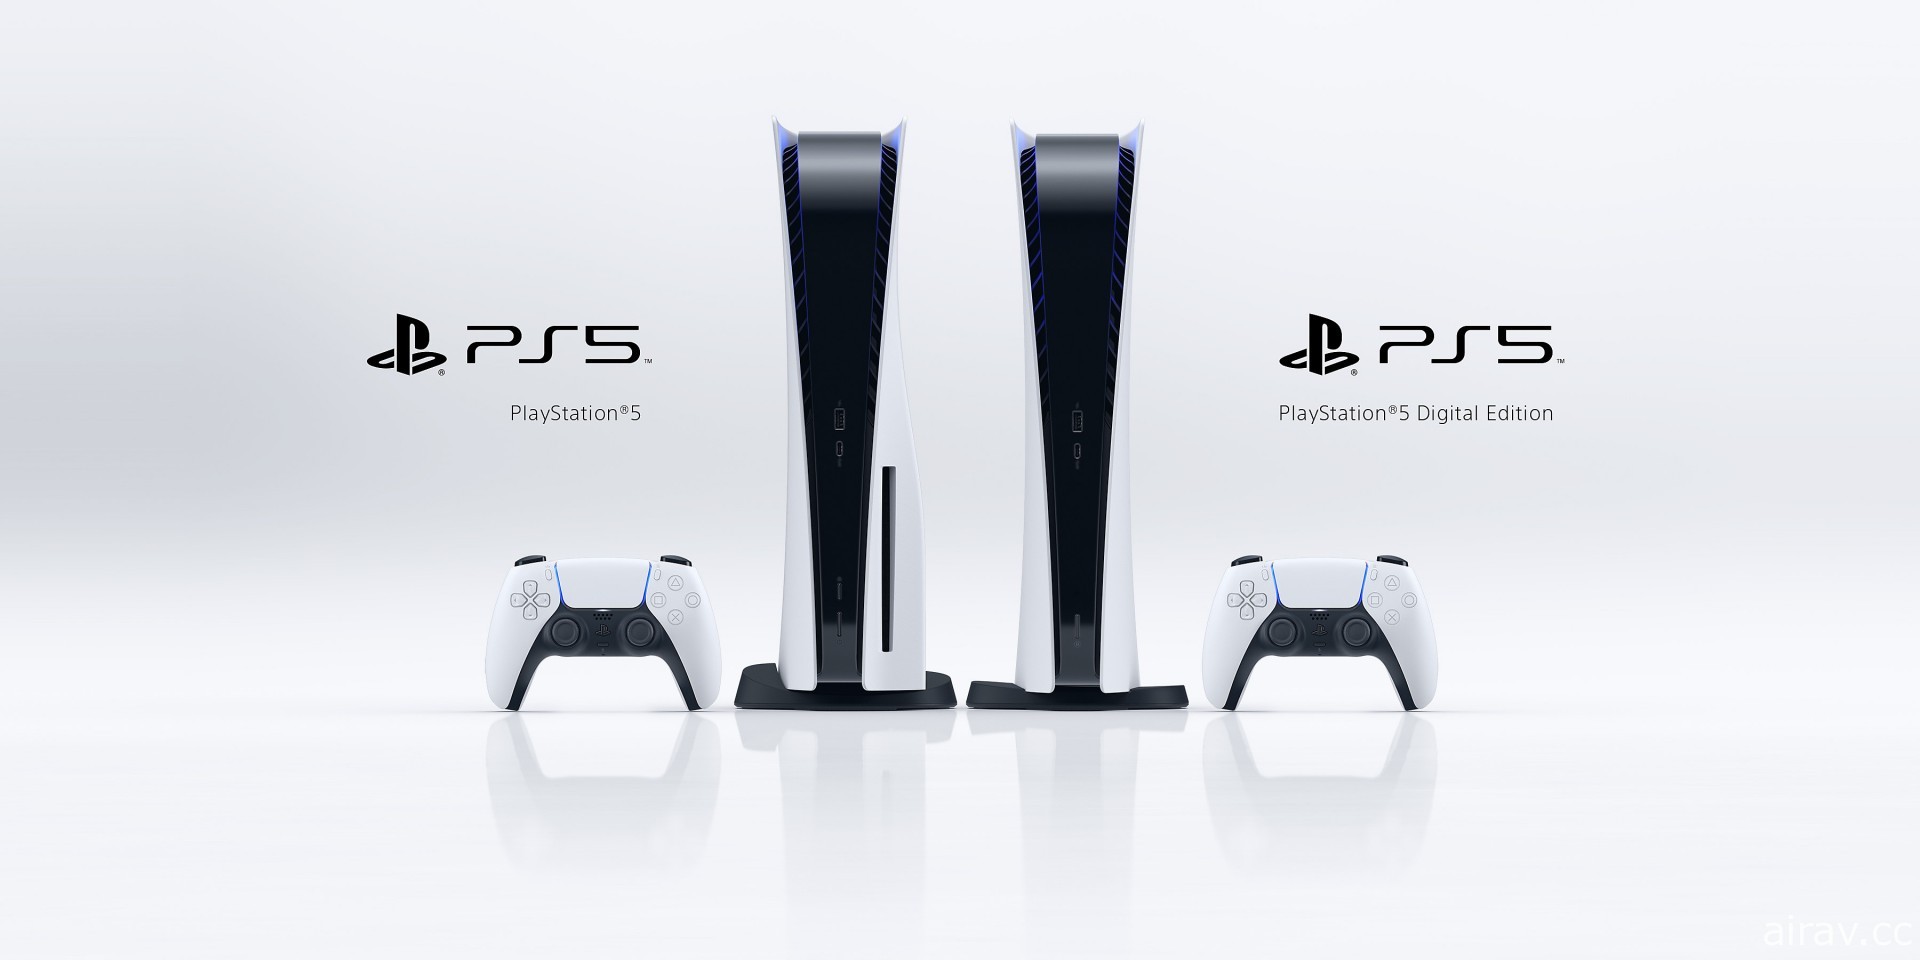 SIE 宣布 PS4 累计销售超过 1 亿 1210 万台 计画将本家制作游戏扩展到 PC 平台